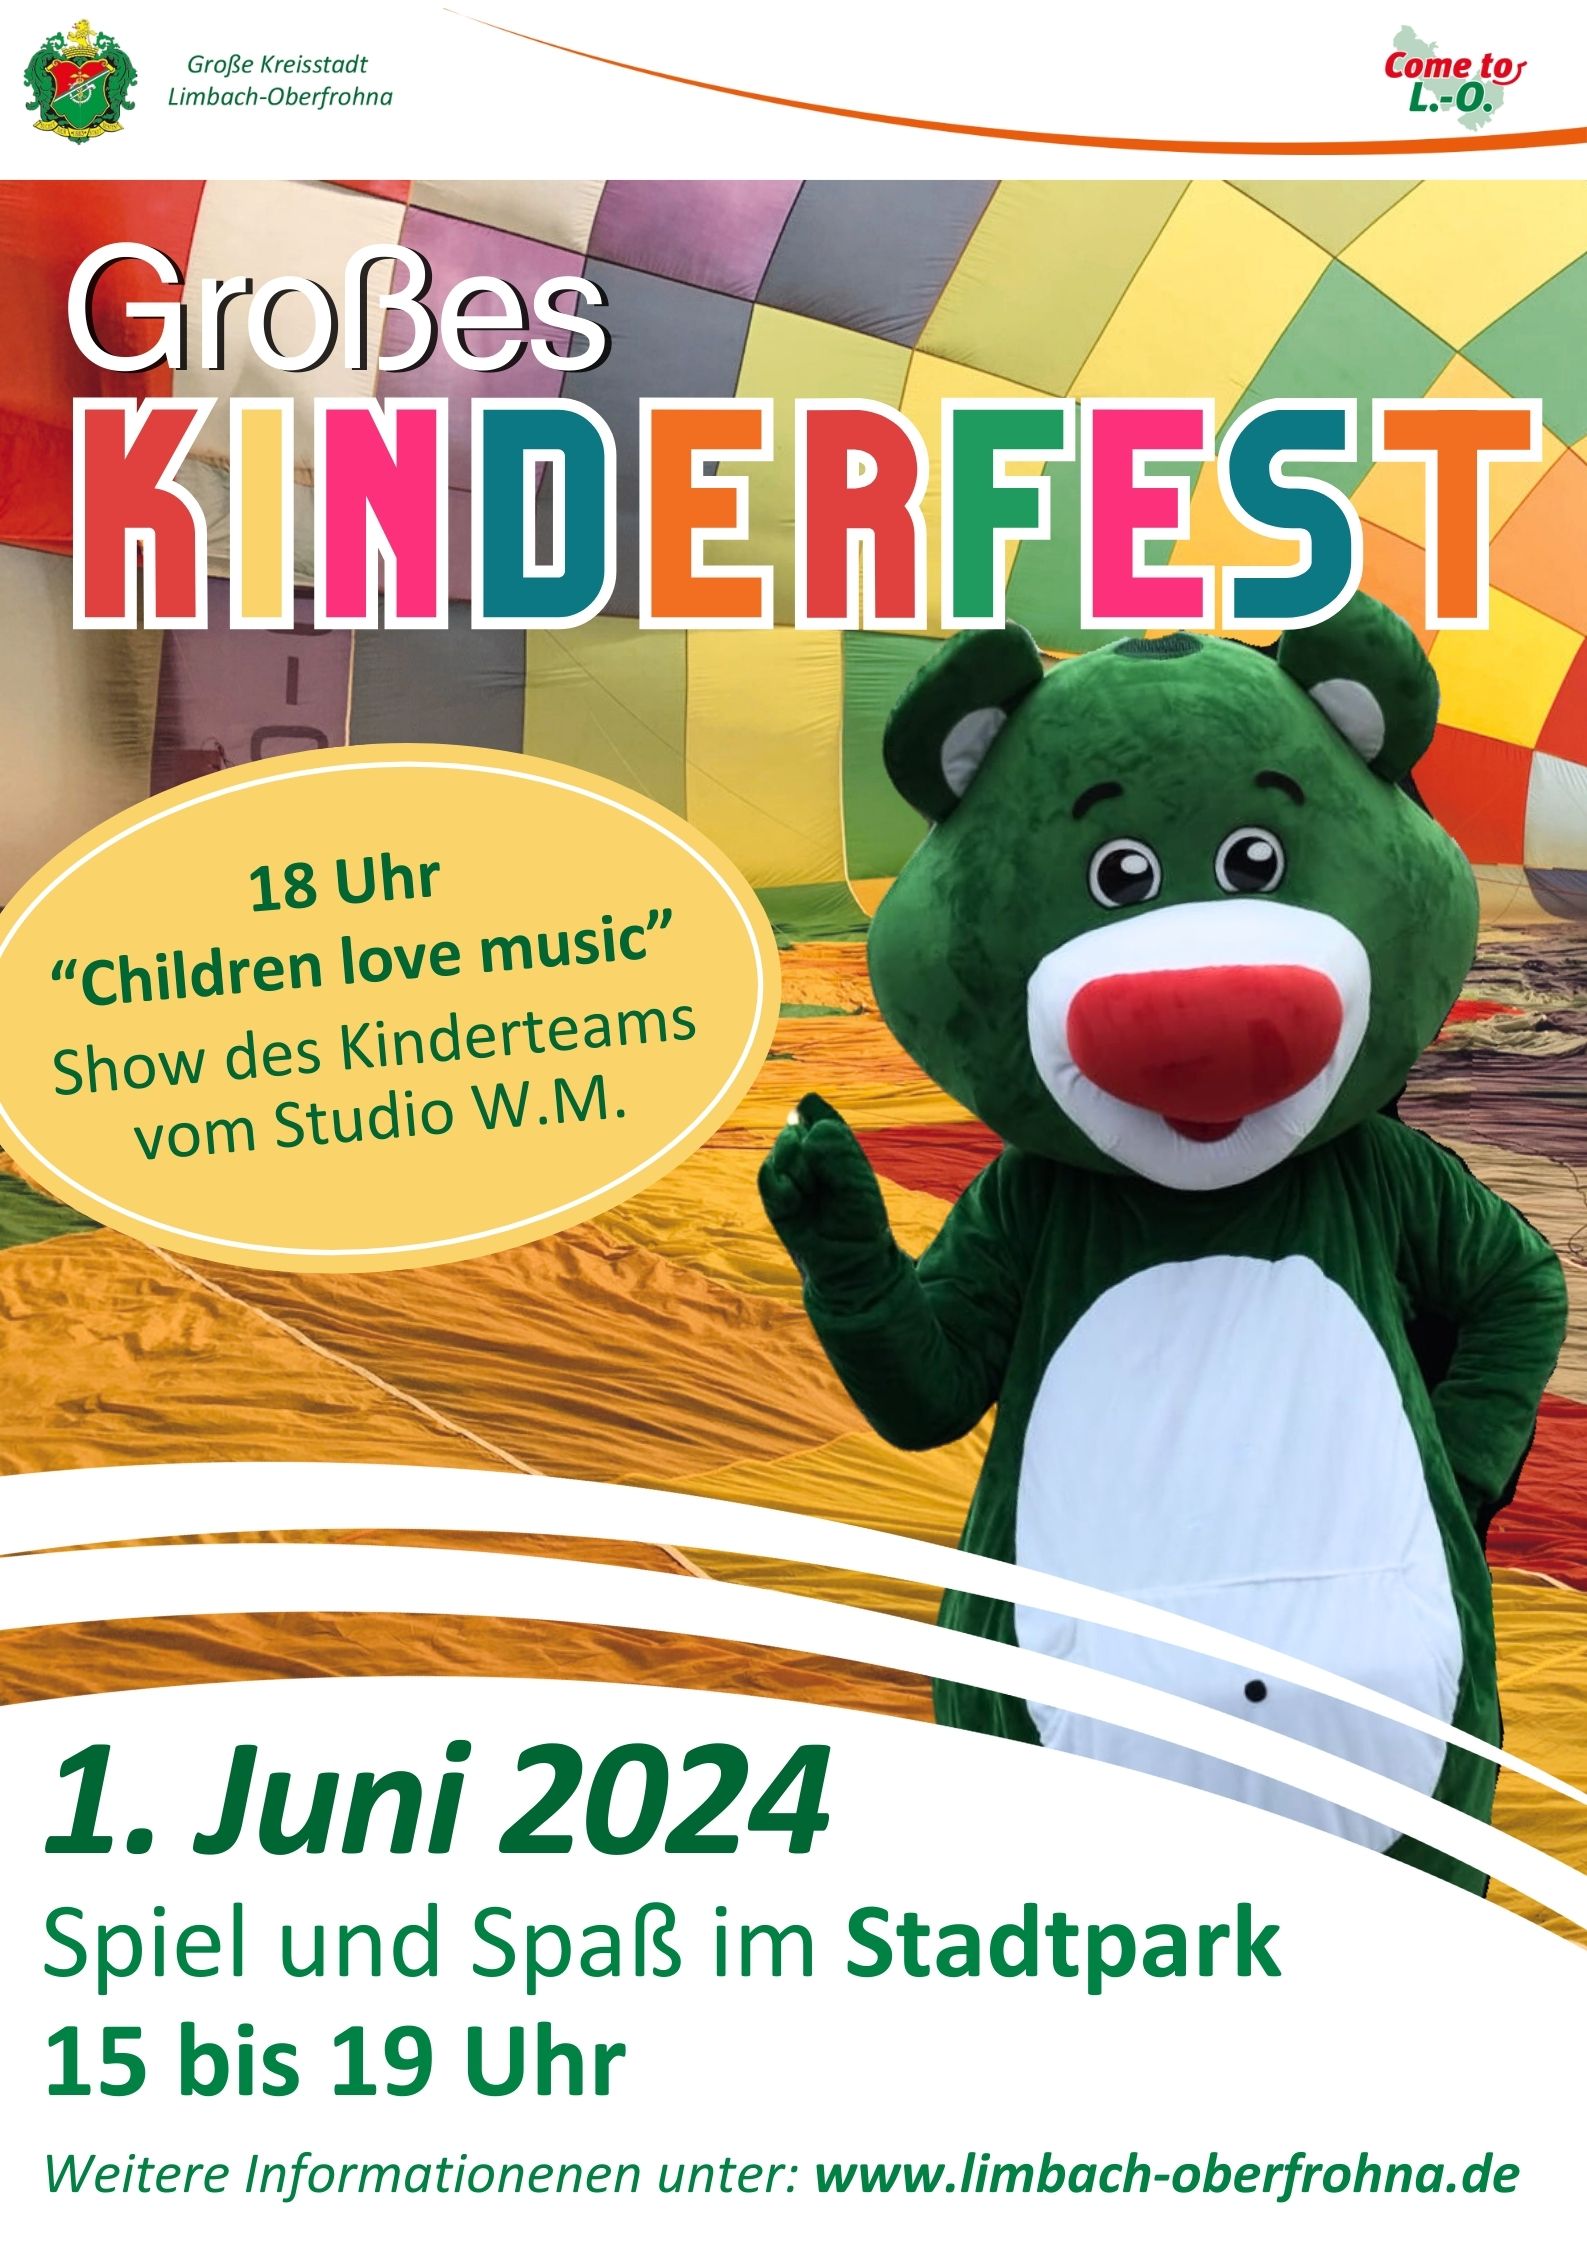 Großes Kinderfest am 1. Juni